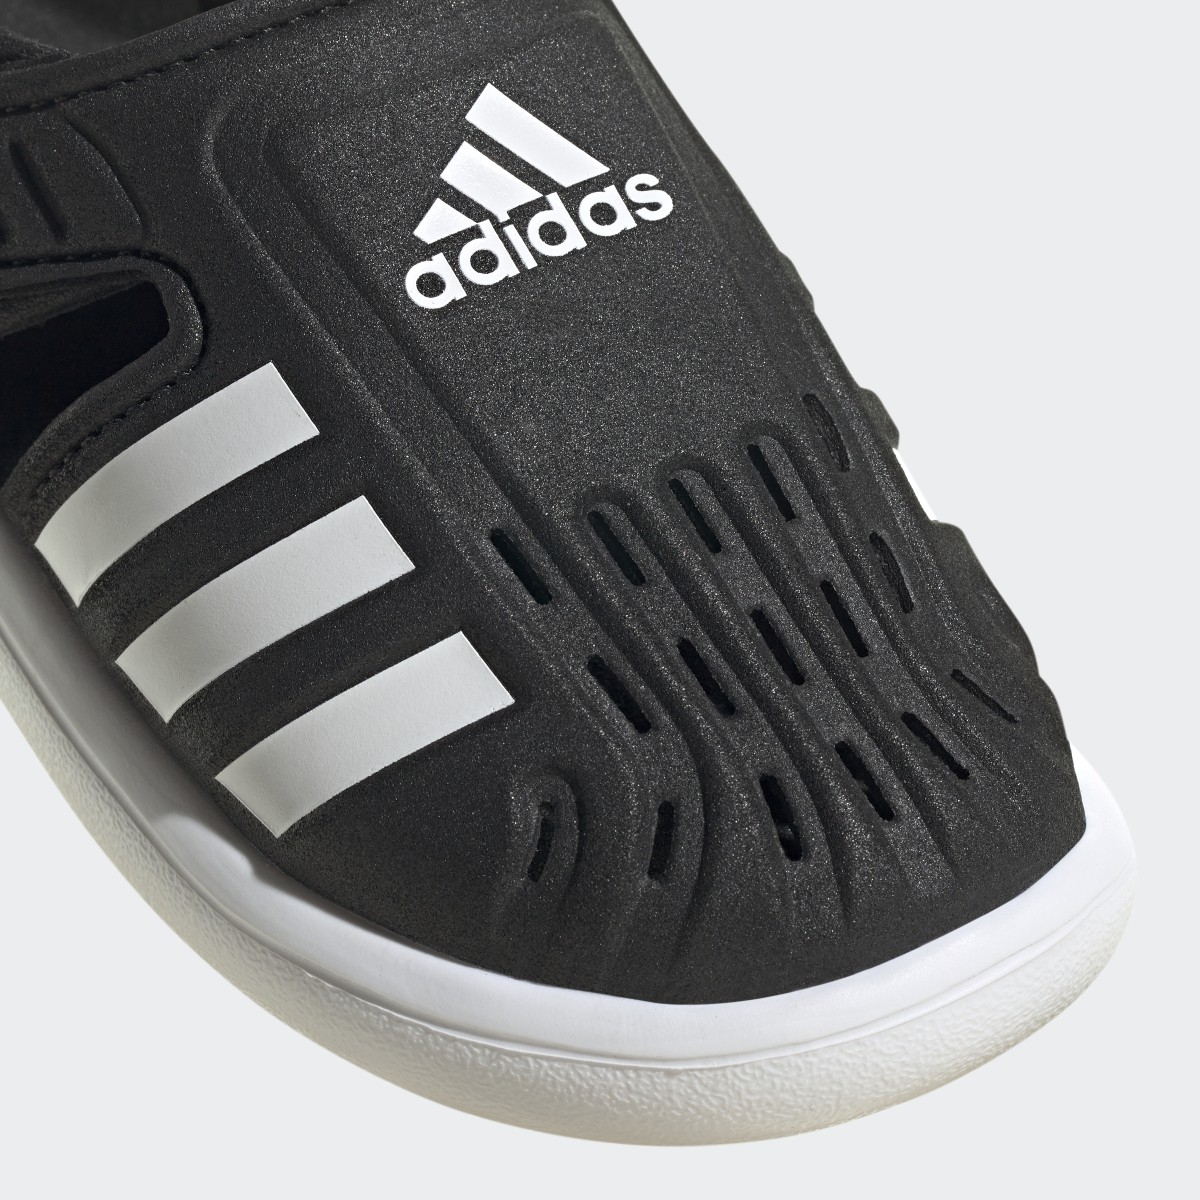 Adidas Closed-Toe Summer Water Sandals. 9